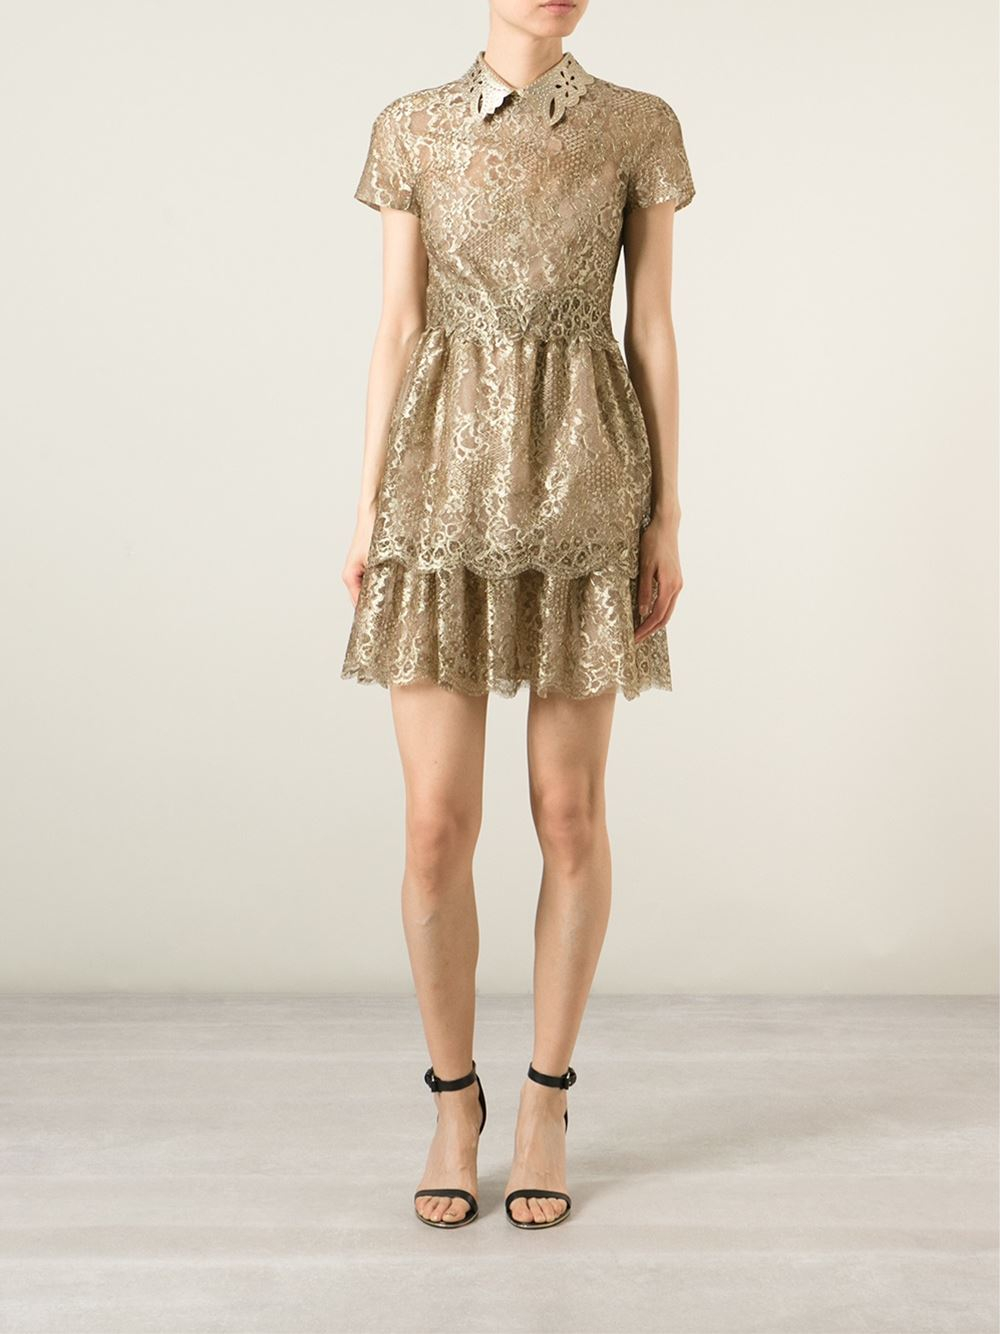 Lyst - Valentino Studded Collar Lace Dress in Metallic